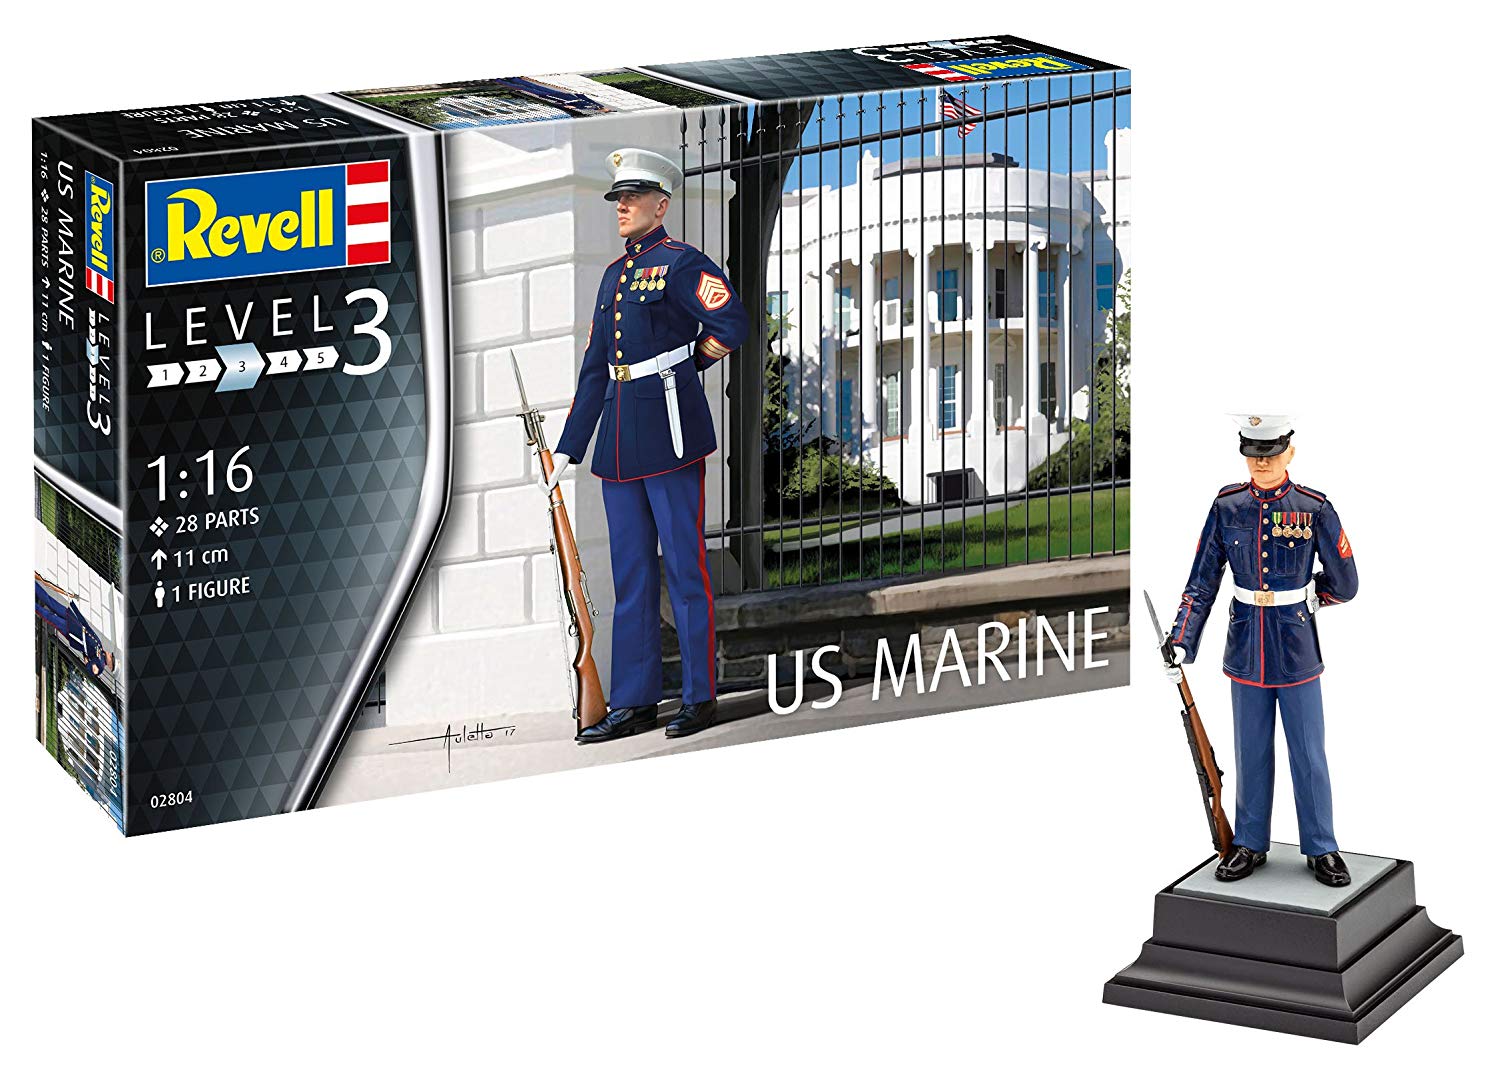 Revell 02804 10 Model Kit 1: 16 Scale Us Marine, Level 3